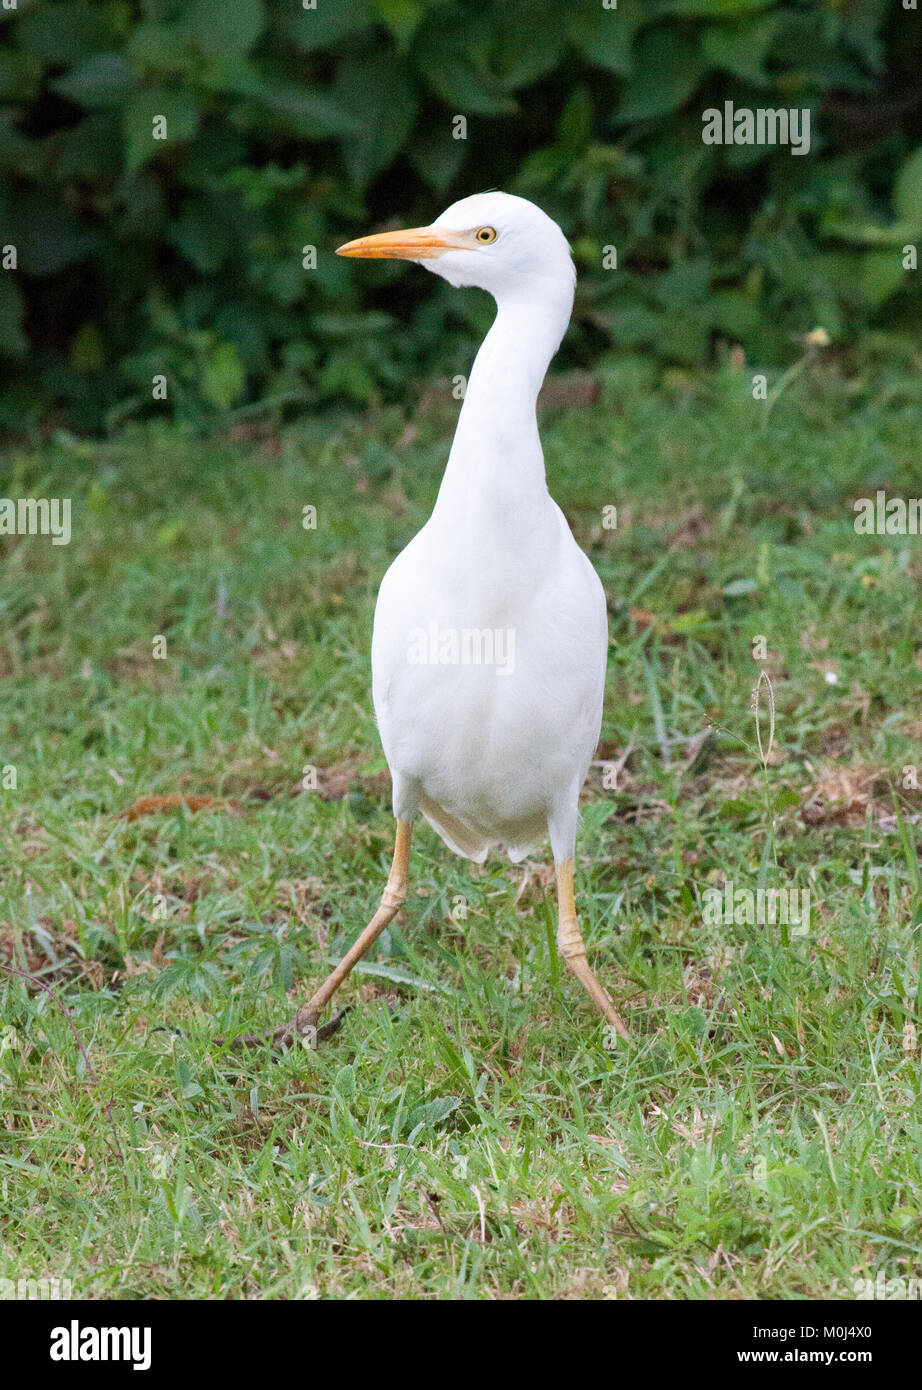 Yellow-billed or intermediate egret (Egretta intermedia) standing in grass Stock Photo